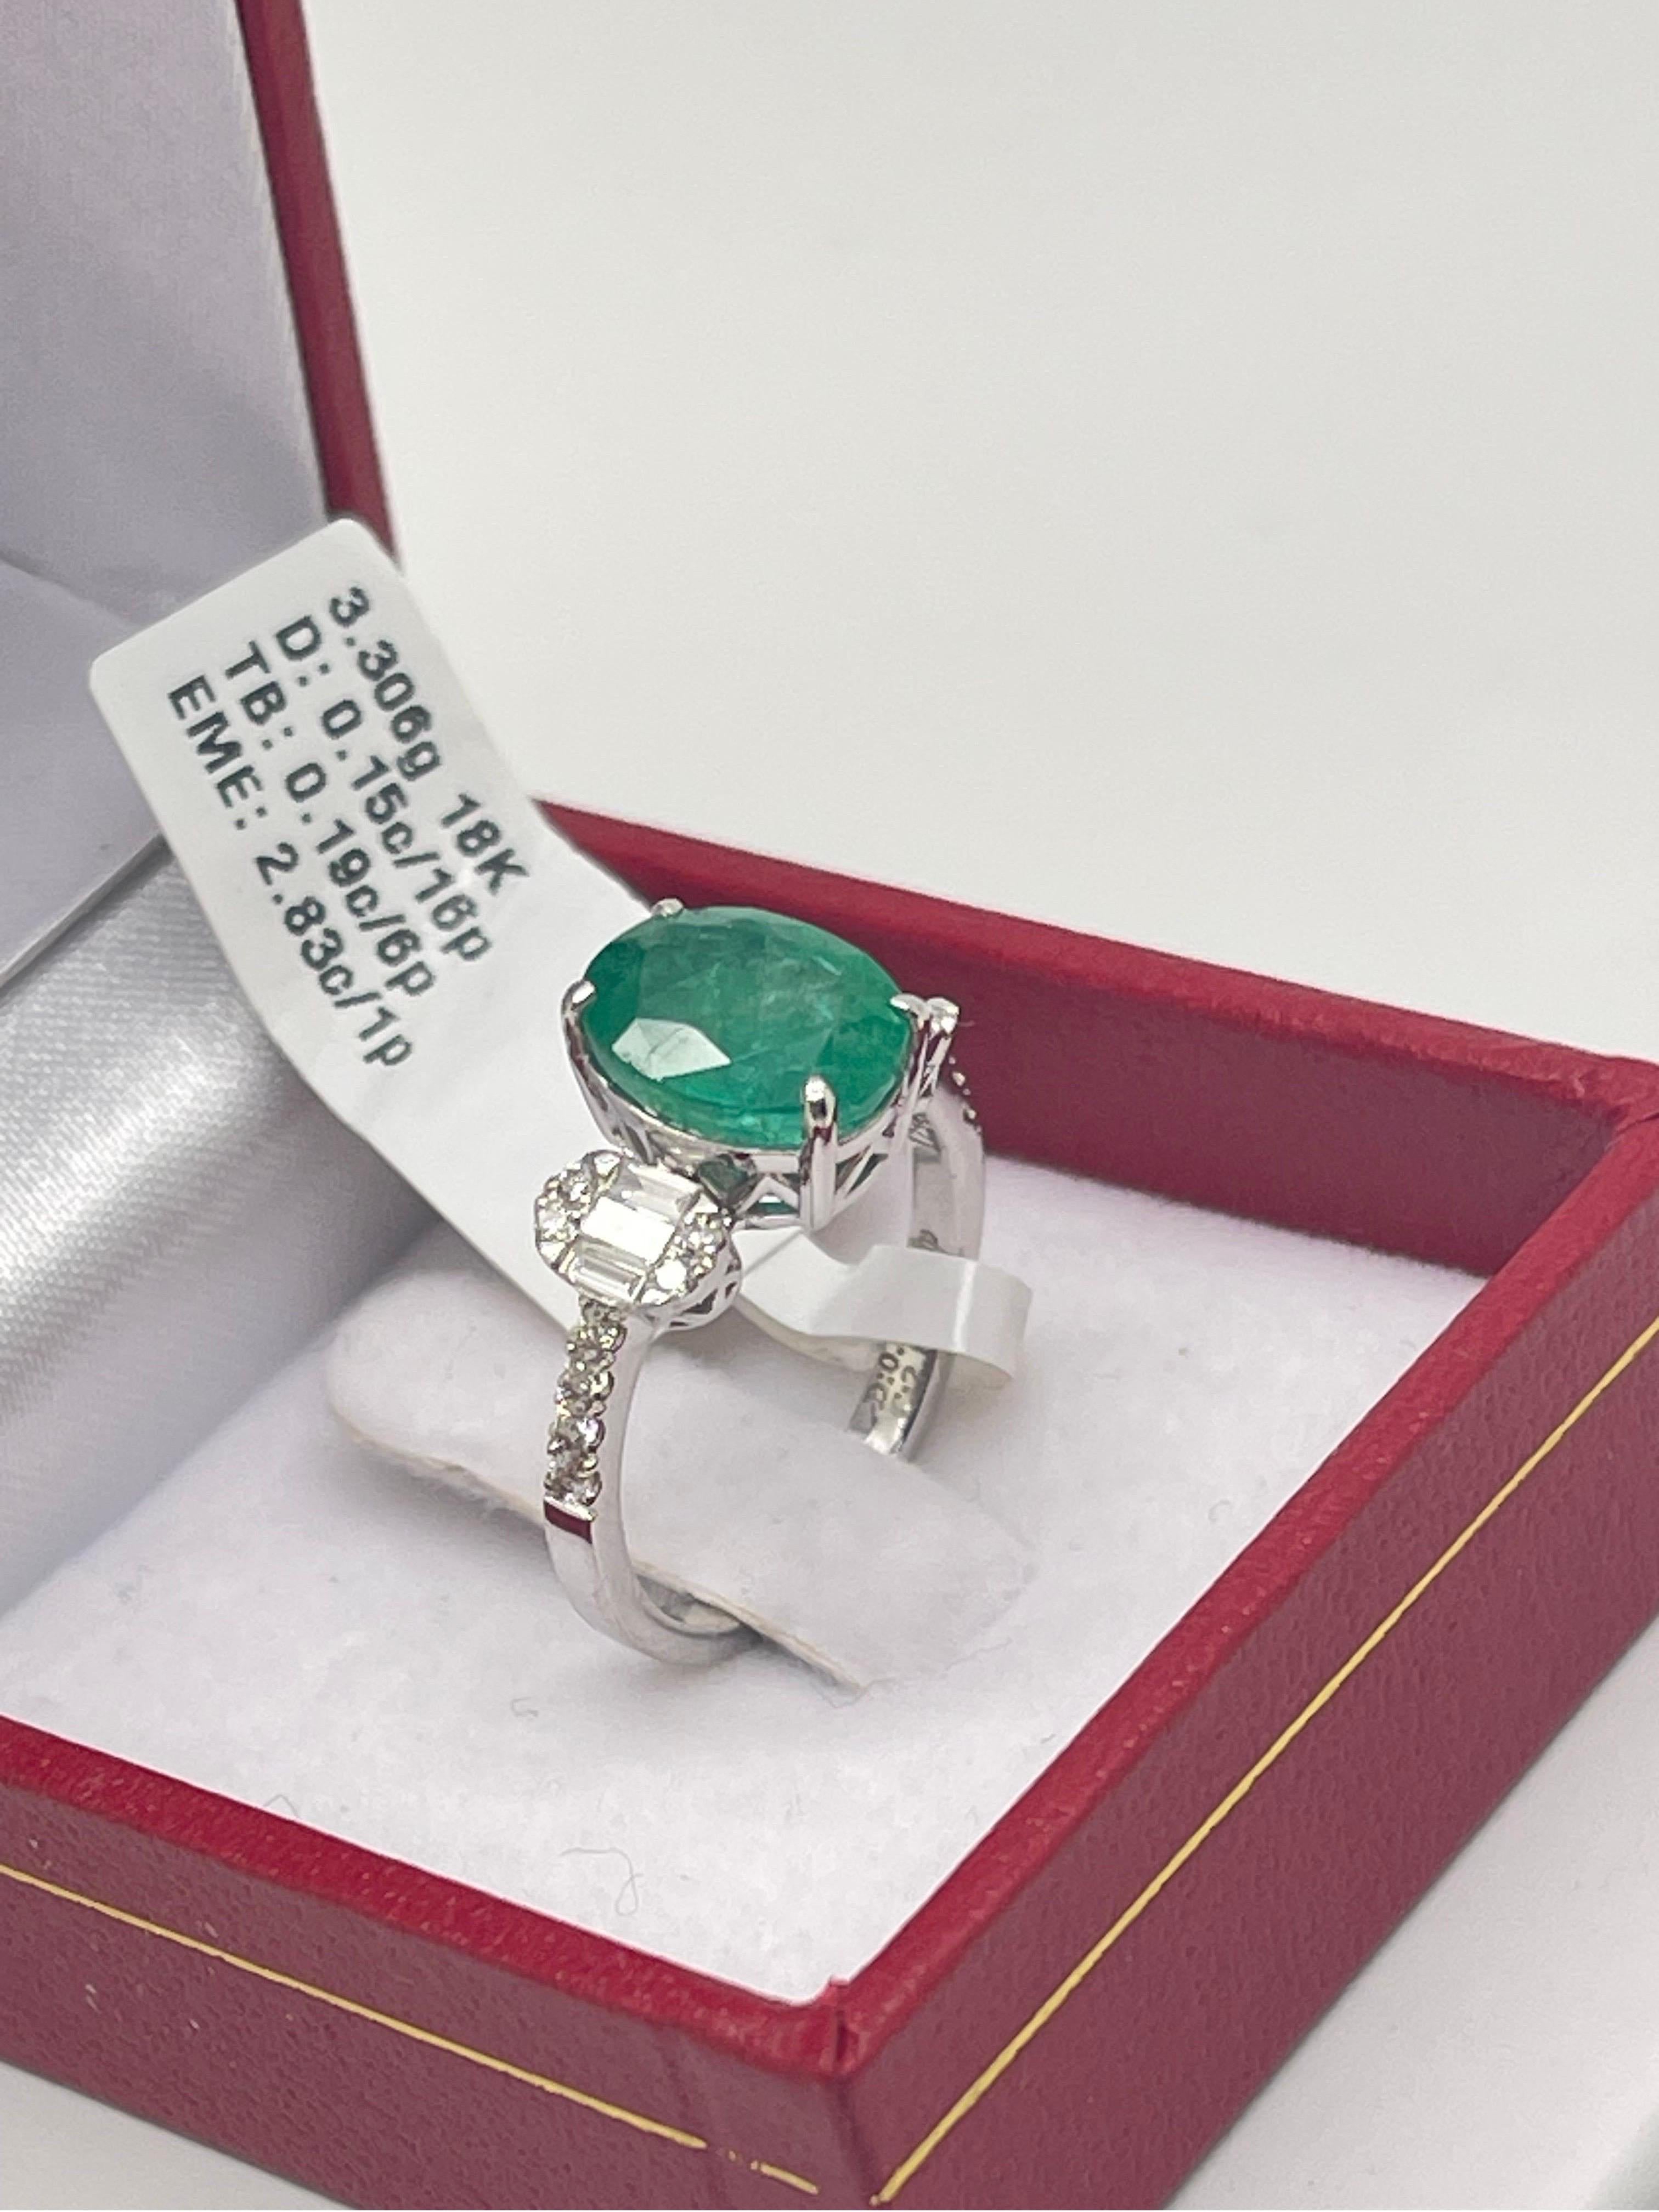 Stunning Emerald & Diamond ring In 18k White Gold.

- 2.83 carats in Emerald,

- .15 carat in round cut diamonds,

- .19 carat in baguette cut diamonds,

- Ring size 6.5